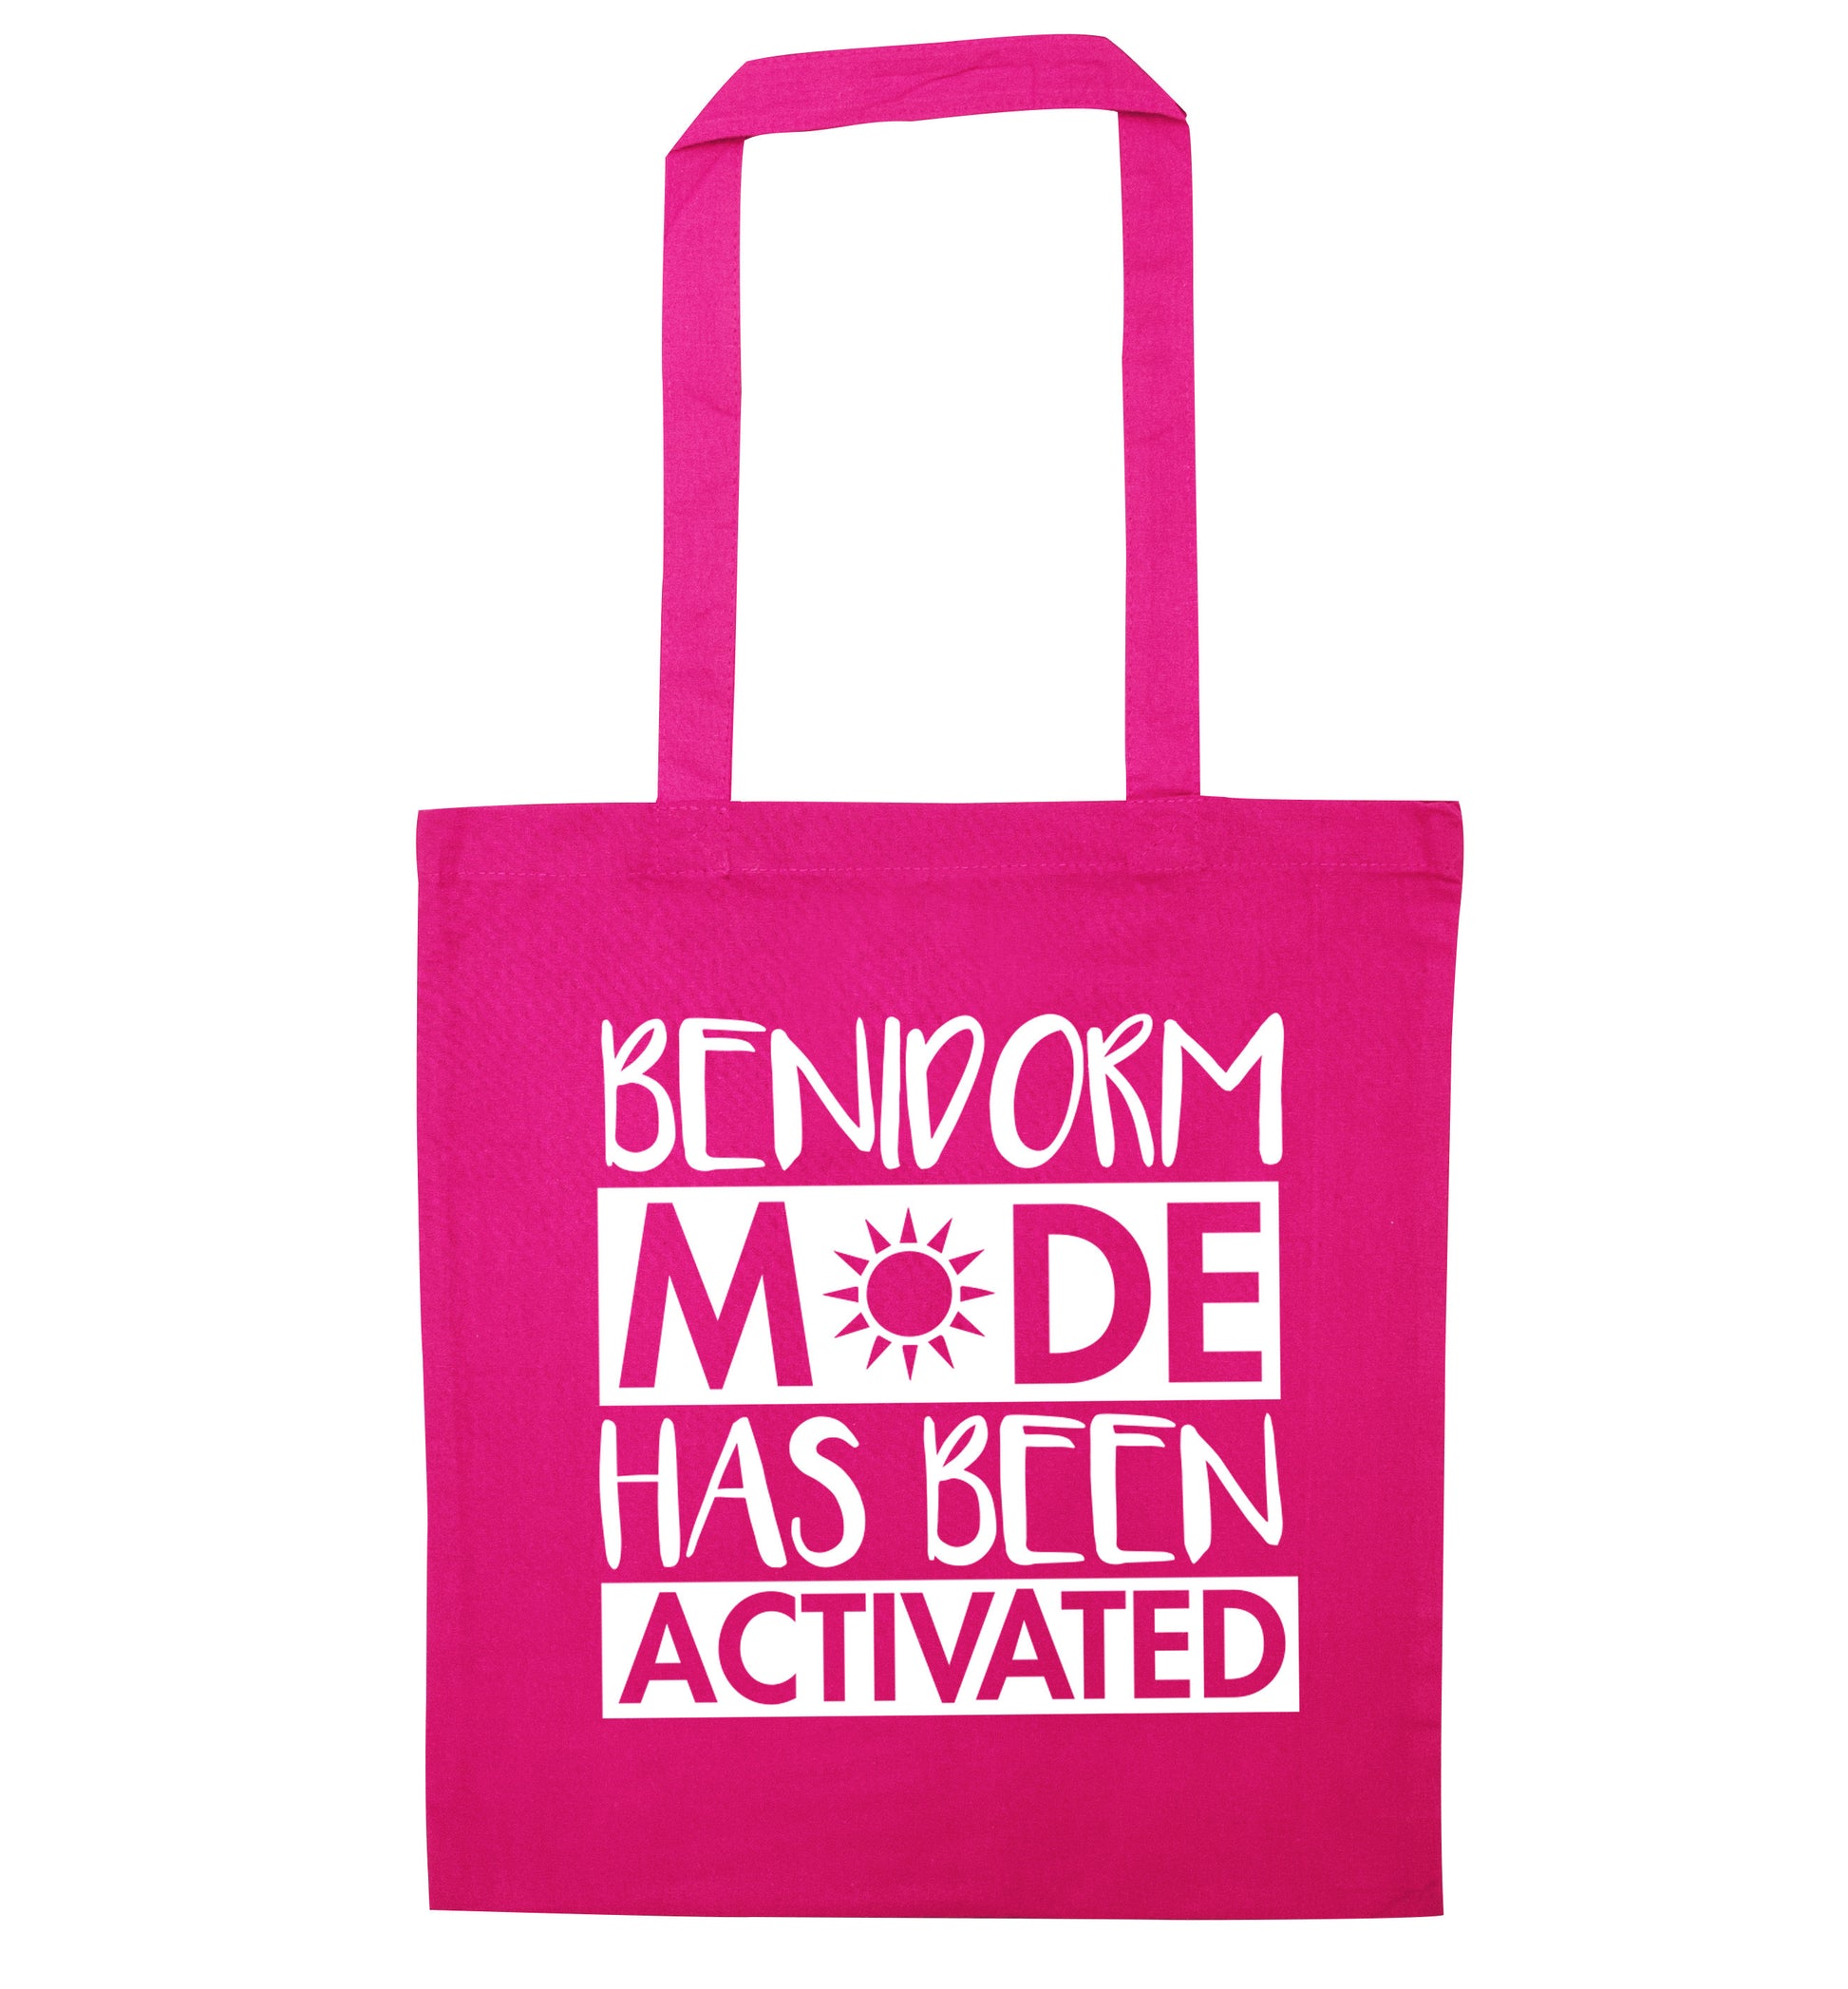 Benidorm mode has been activated pink tote bag